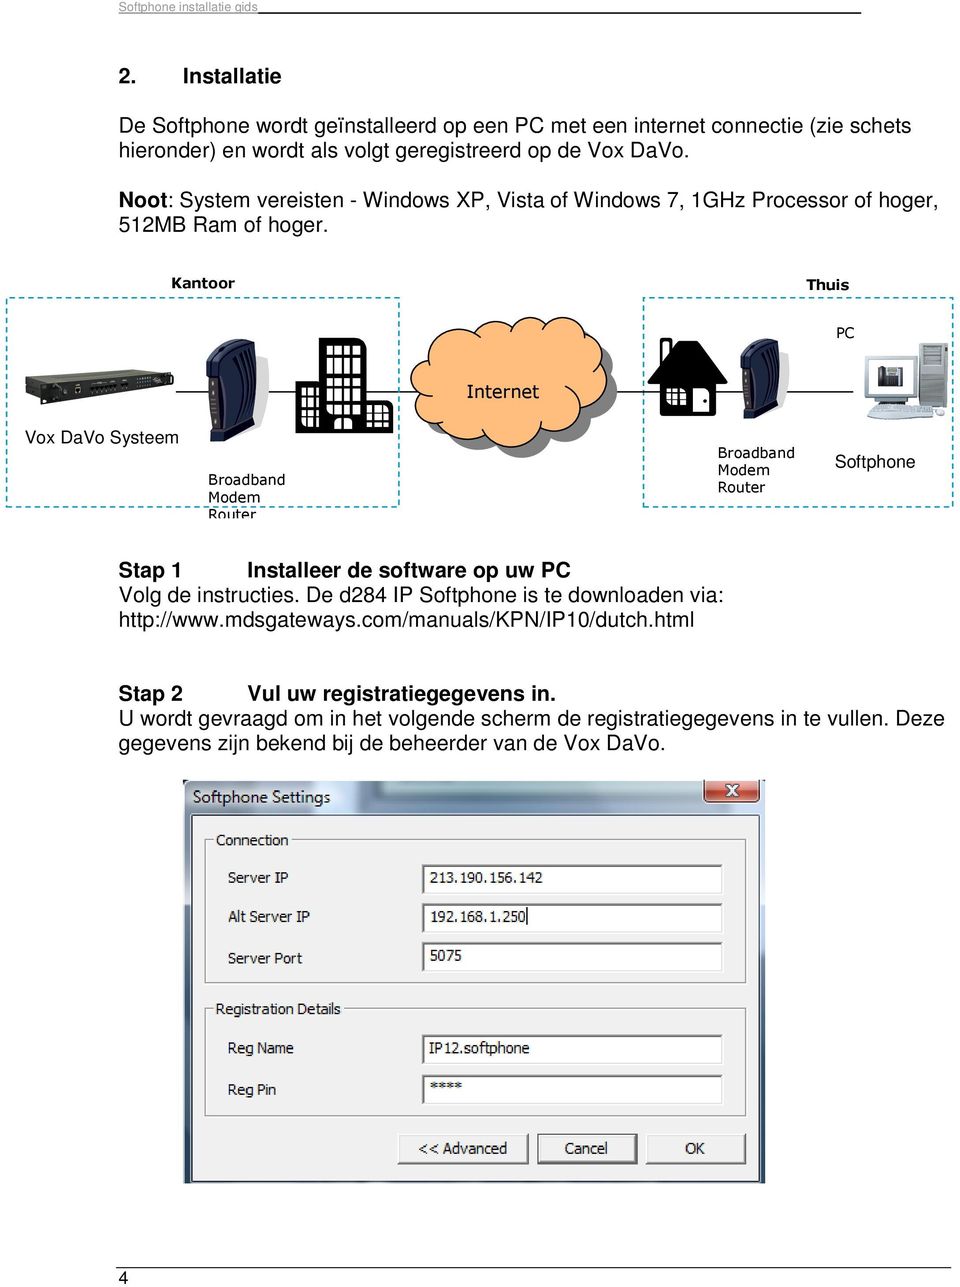 Noot: System vereisten - Windows XP, Vista of Windows 7, 1GHz Processor of hoger, 512MB Ram of hoger.